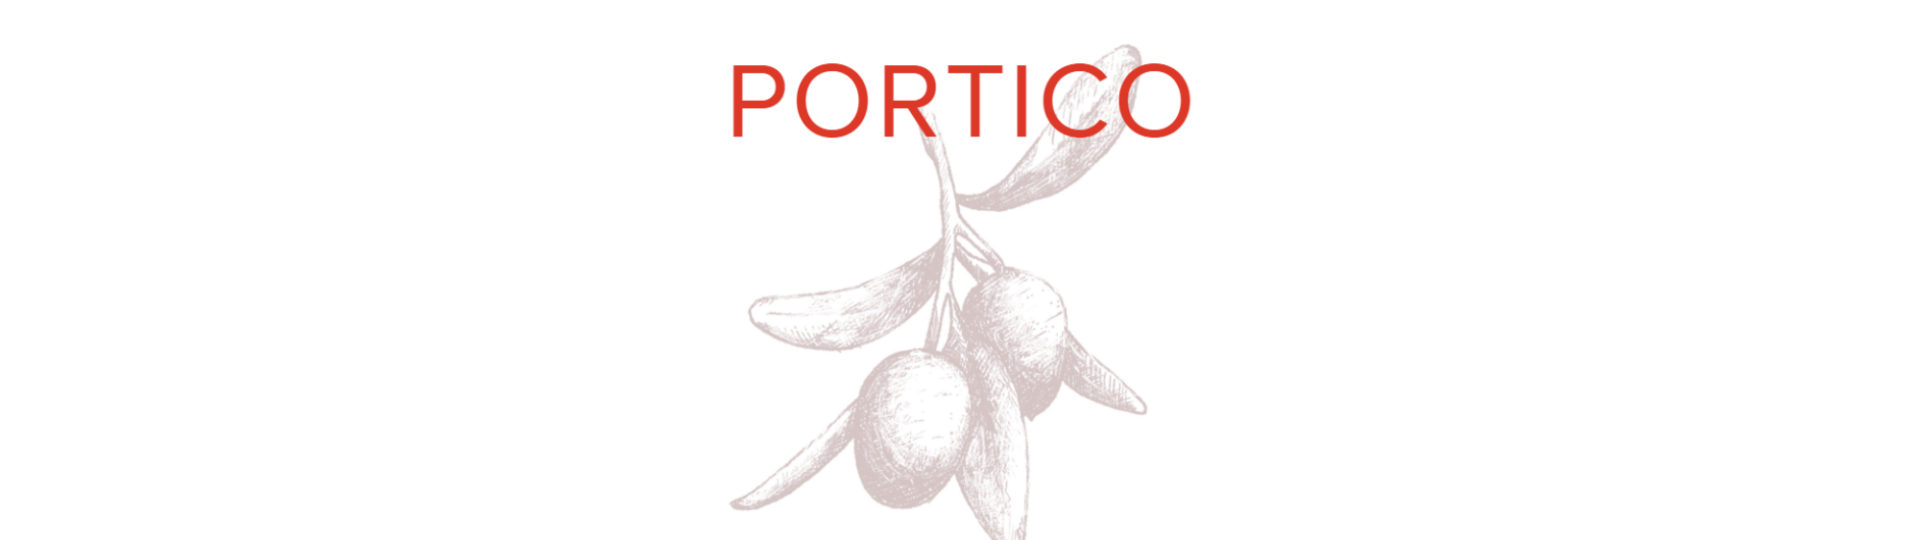 Portico Italian logo